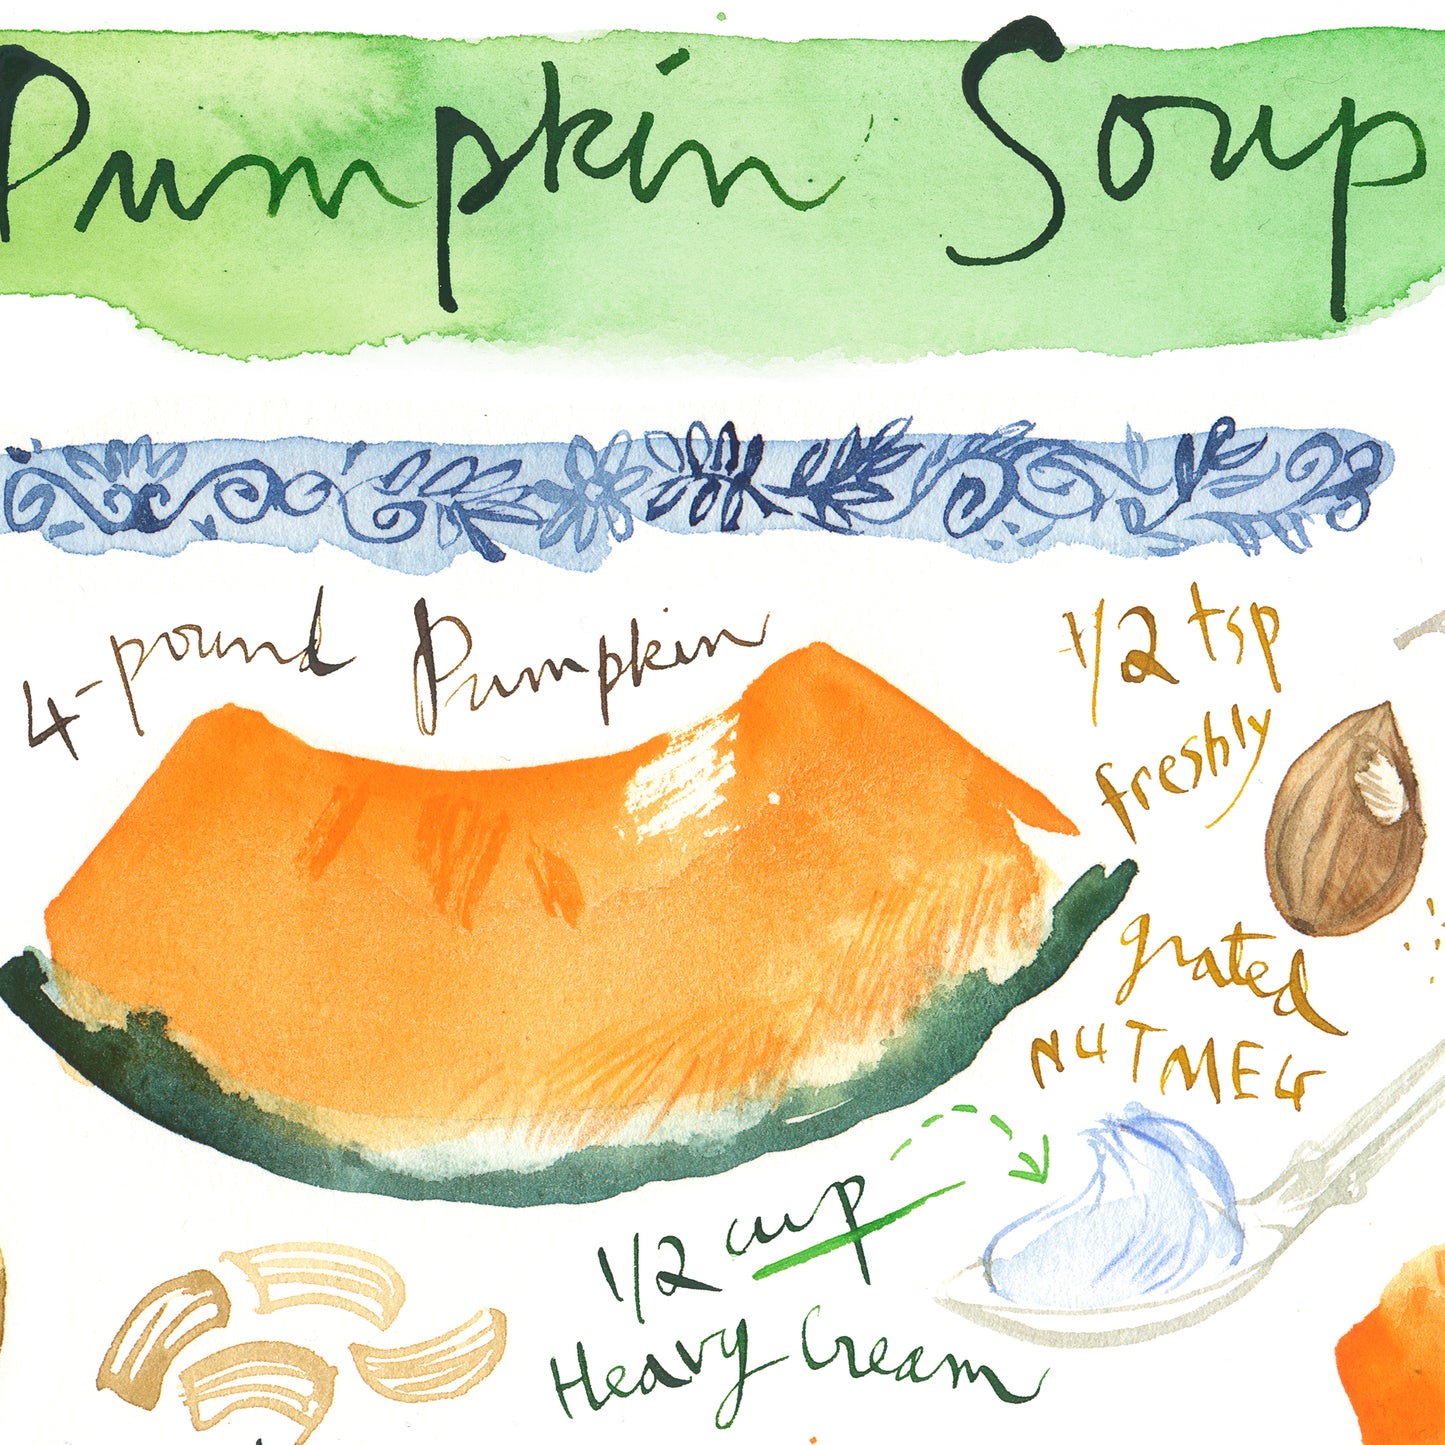 Pumpkin soup recipe